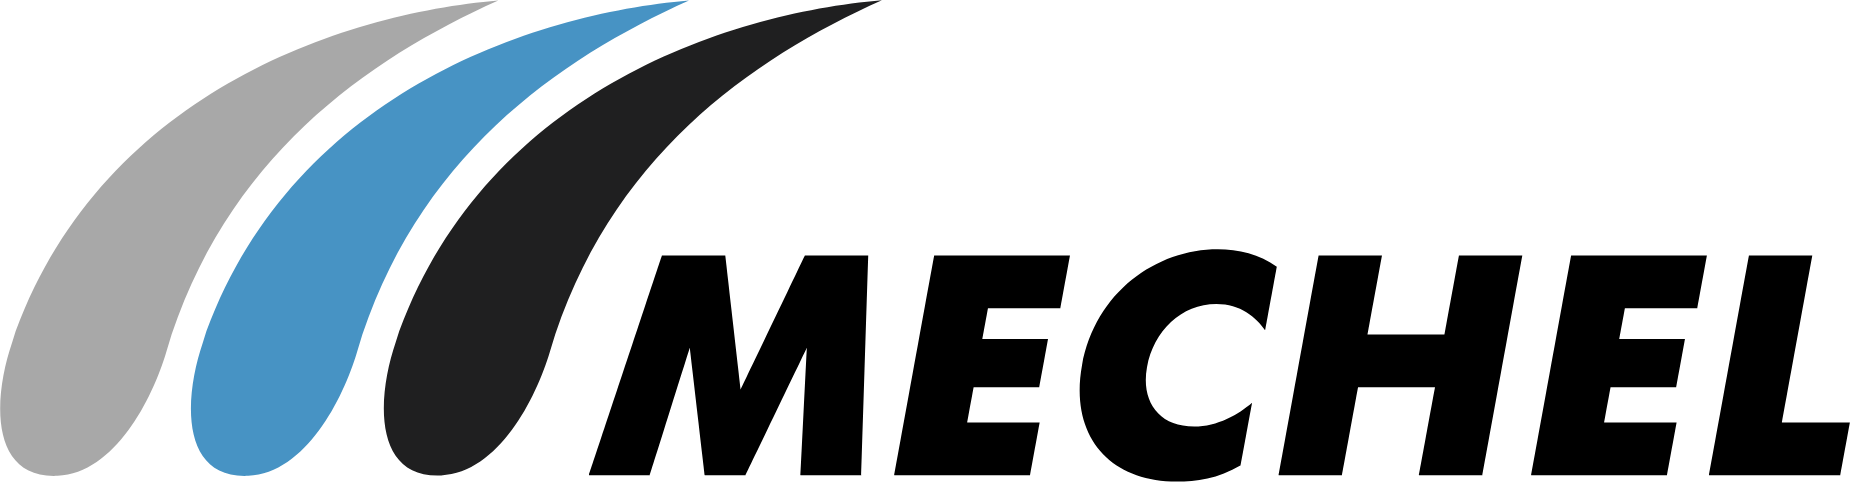 Mechel PAO logo large (transparent PNG)